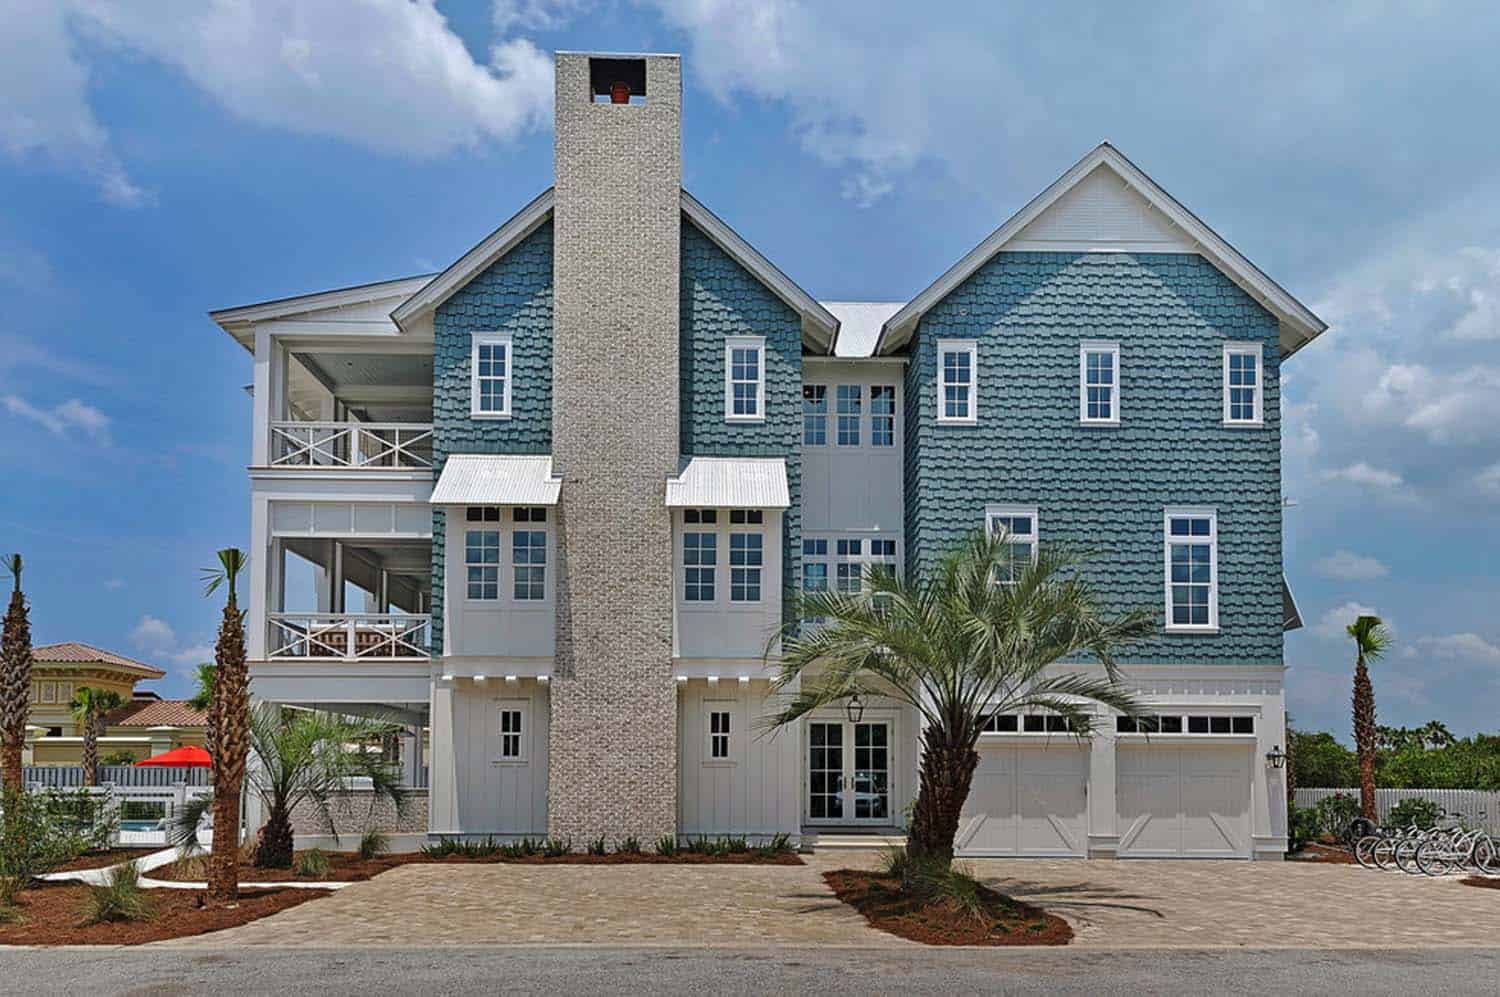 Delightfully chic beach house nestled along the Florida seaside